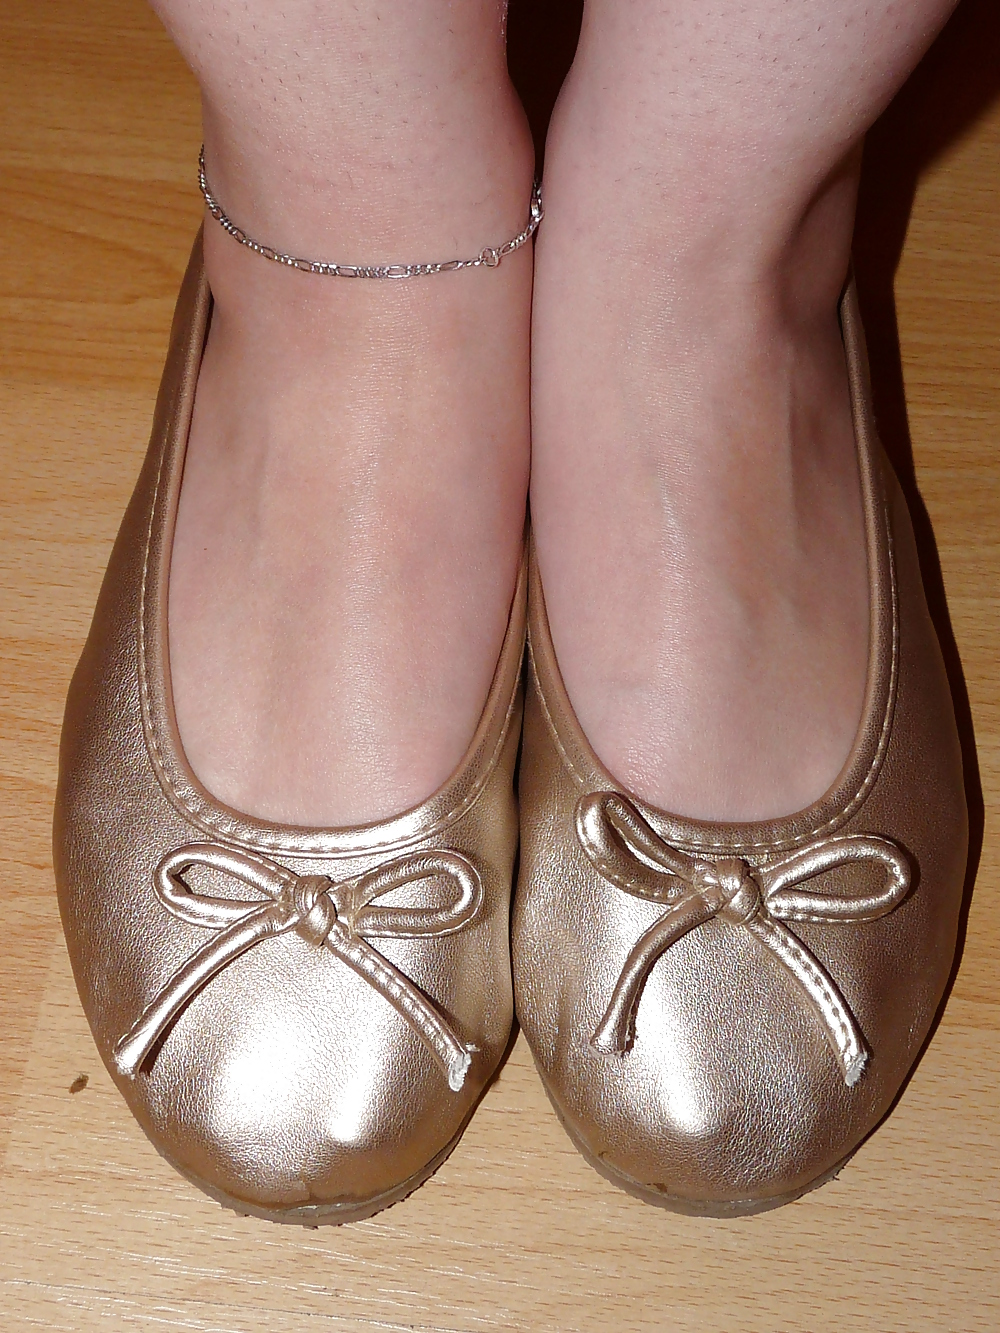 wifes gold heels flats ballerinas shoes feet 2 porn gallery